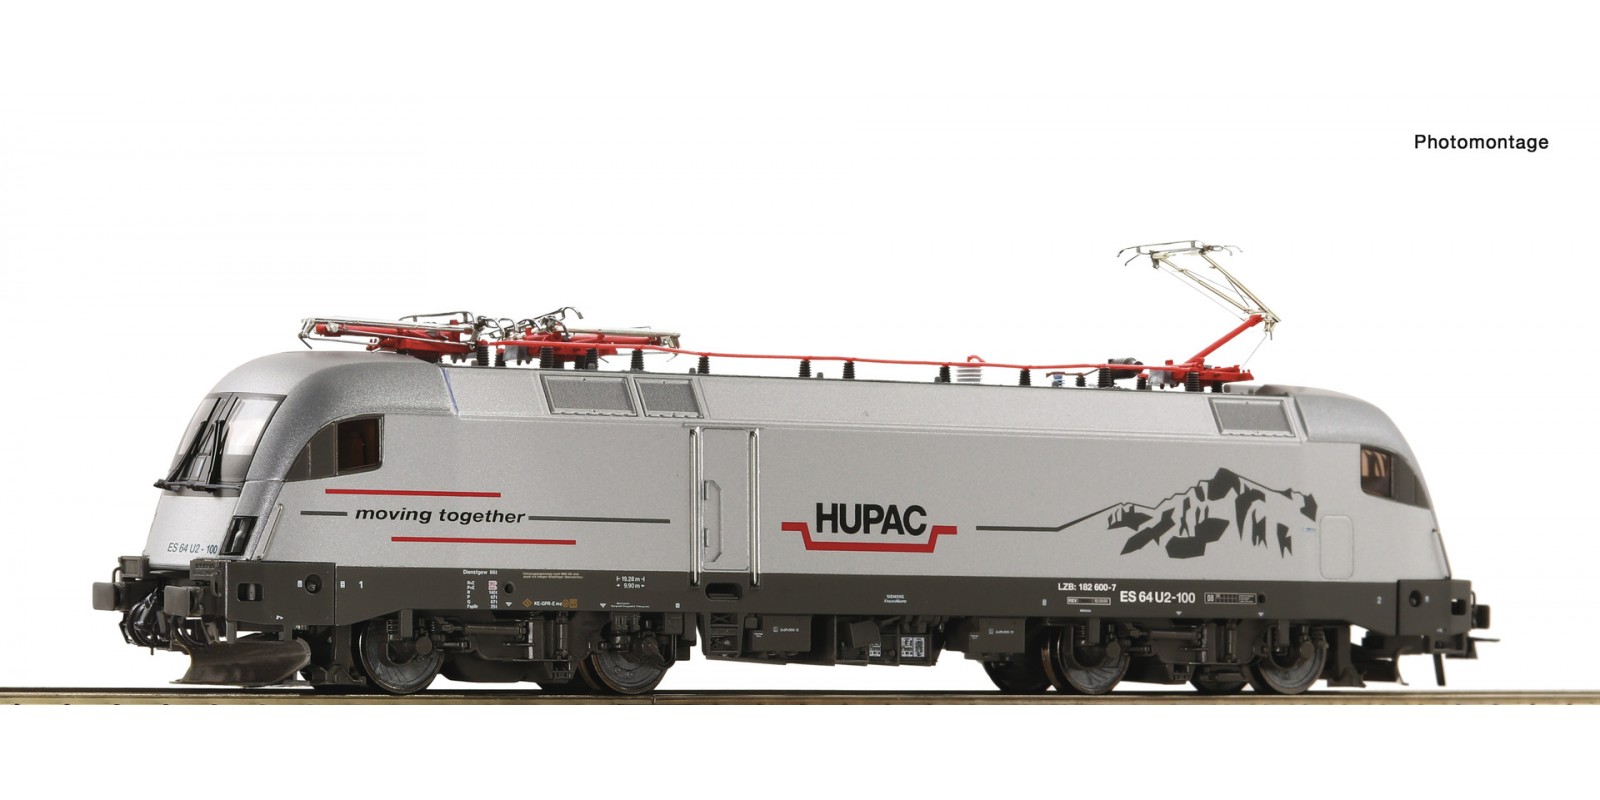 RO7500070 Electric locomotive ES 64  U2-100, HUPAC           